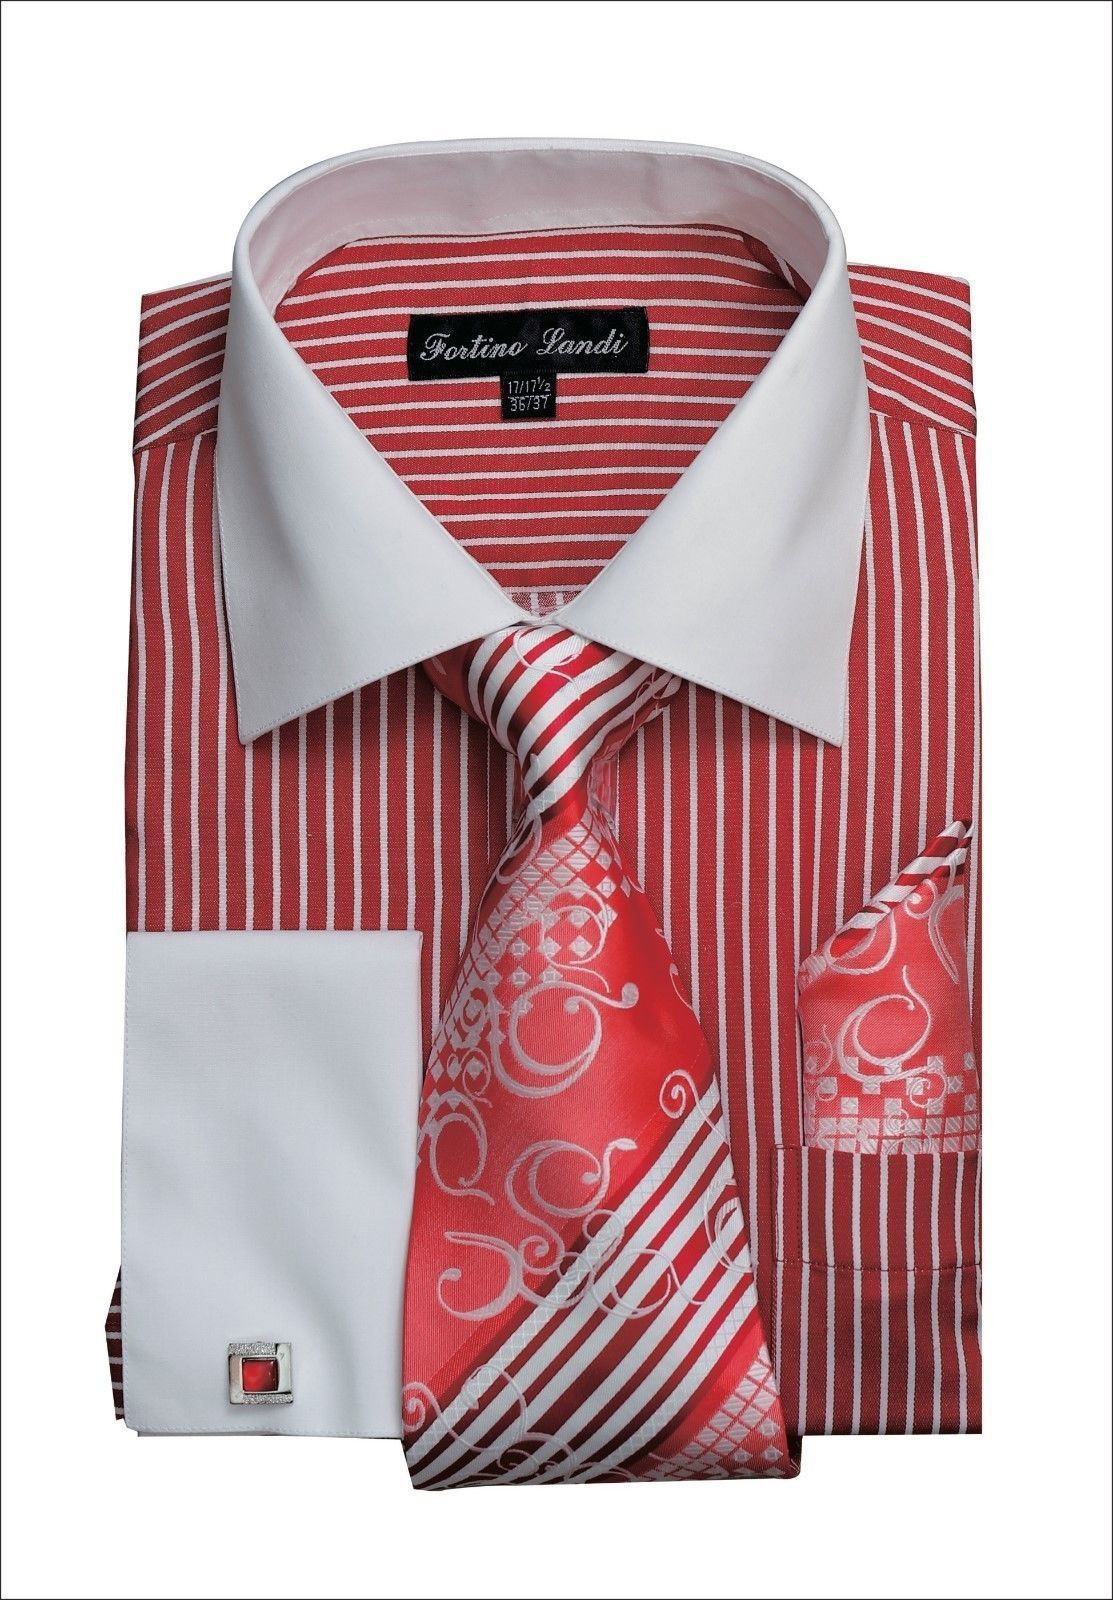 Handkerchief French Cuff Links Striped FL631 Men's Dress Shirt with Tie 